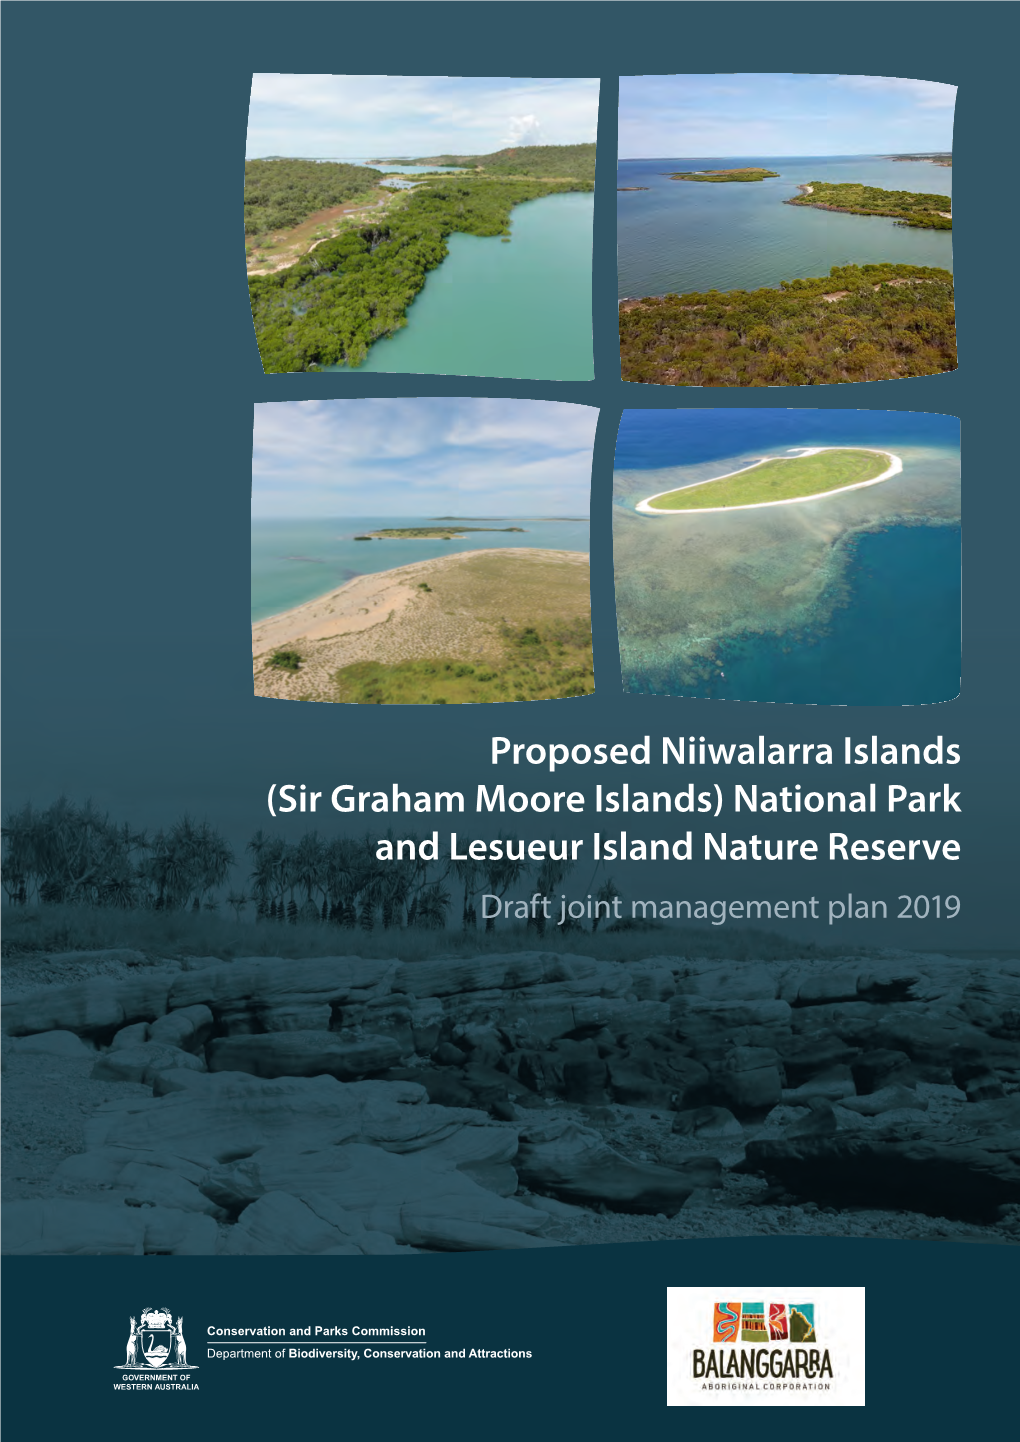 Proposed Niiwalarra Islands National Park and Lesueur Nature Reserve